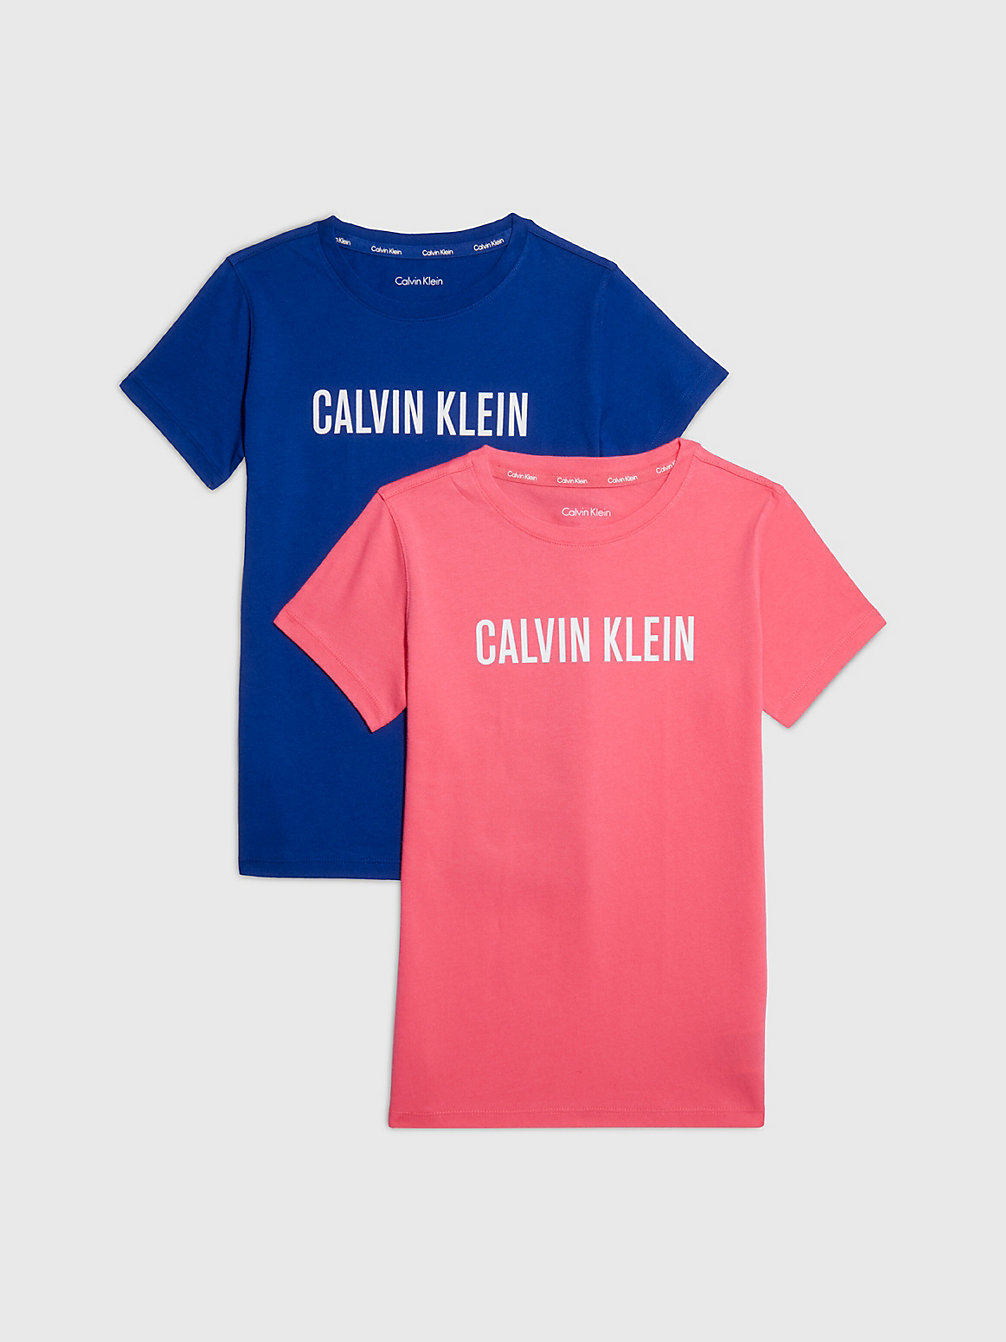 PINKFLASH/BOLDBLUE > Zestaw 2 Par T-Shirtów - Intense Power > undefined Dziewczynki - Calvin Klein